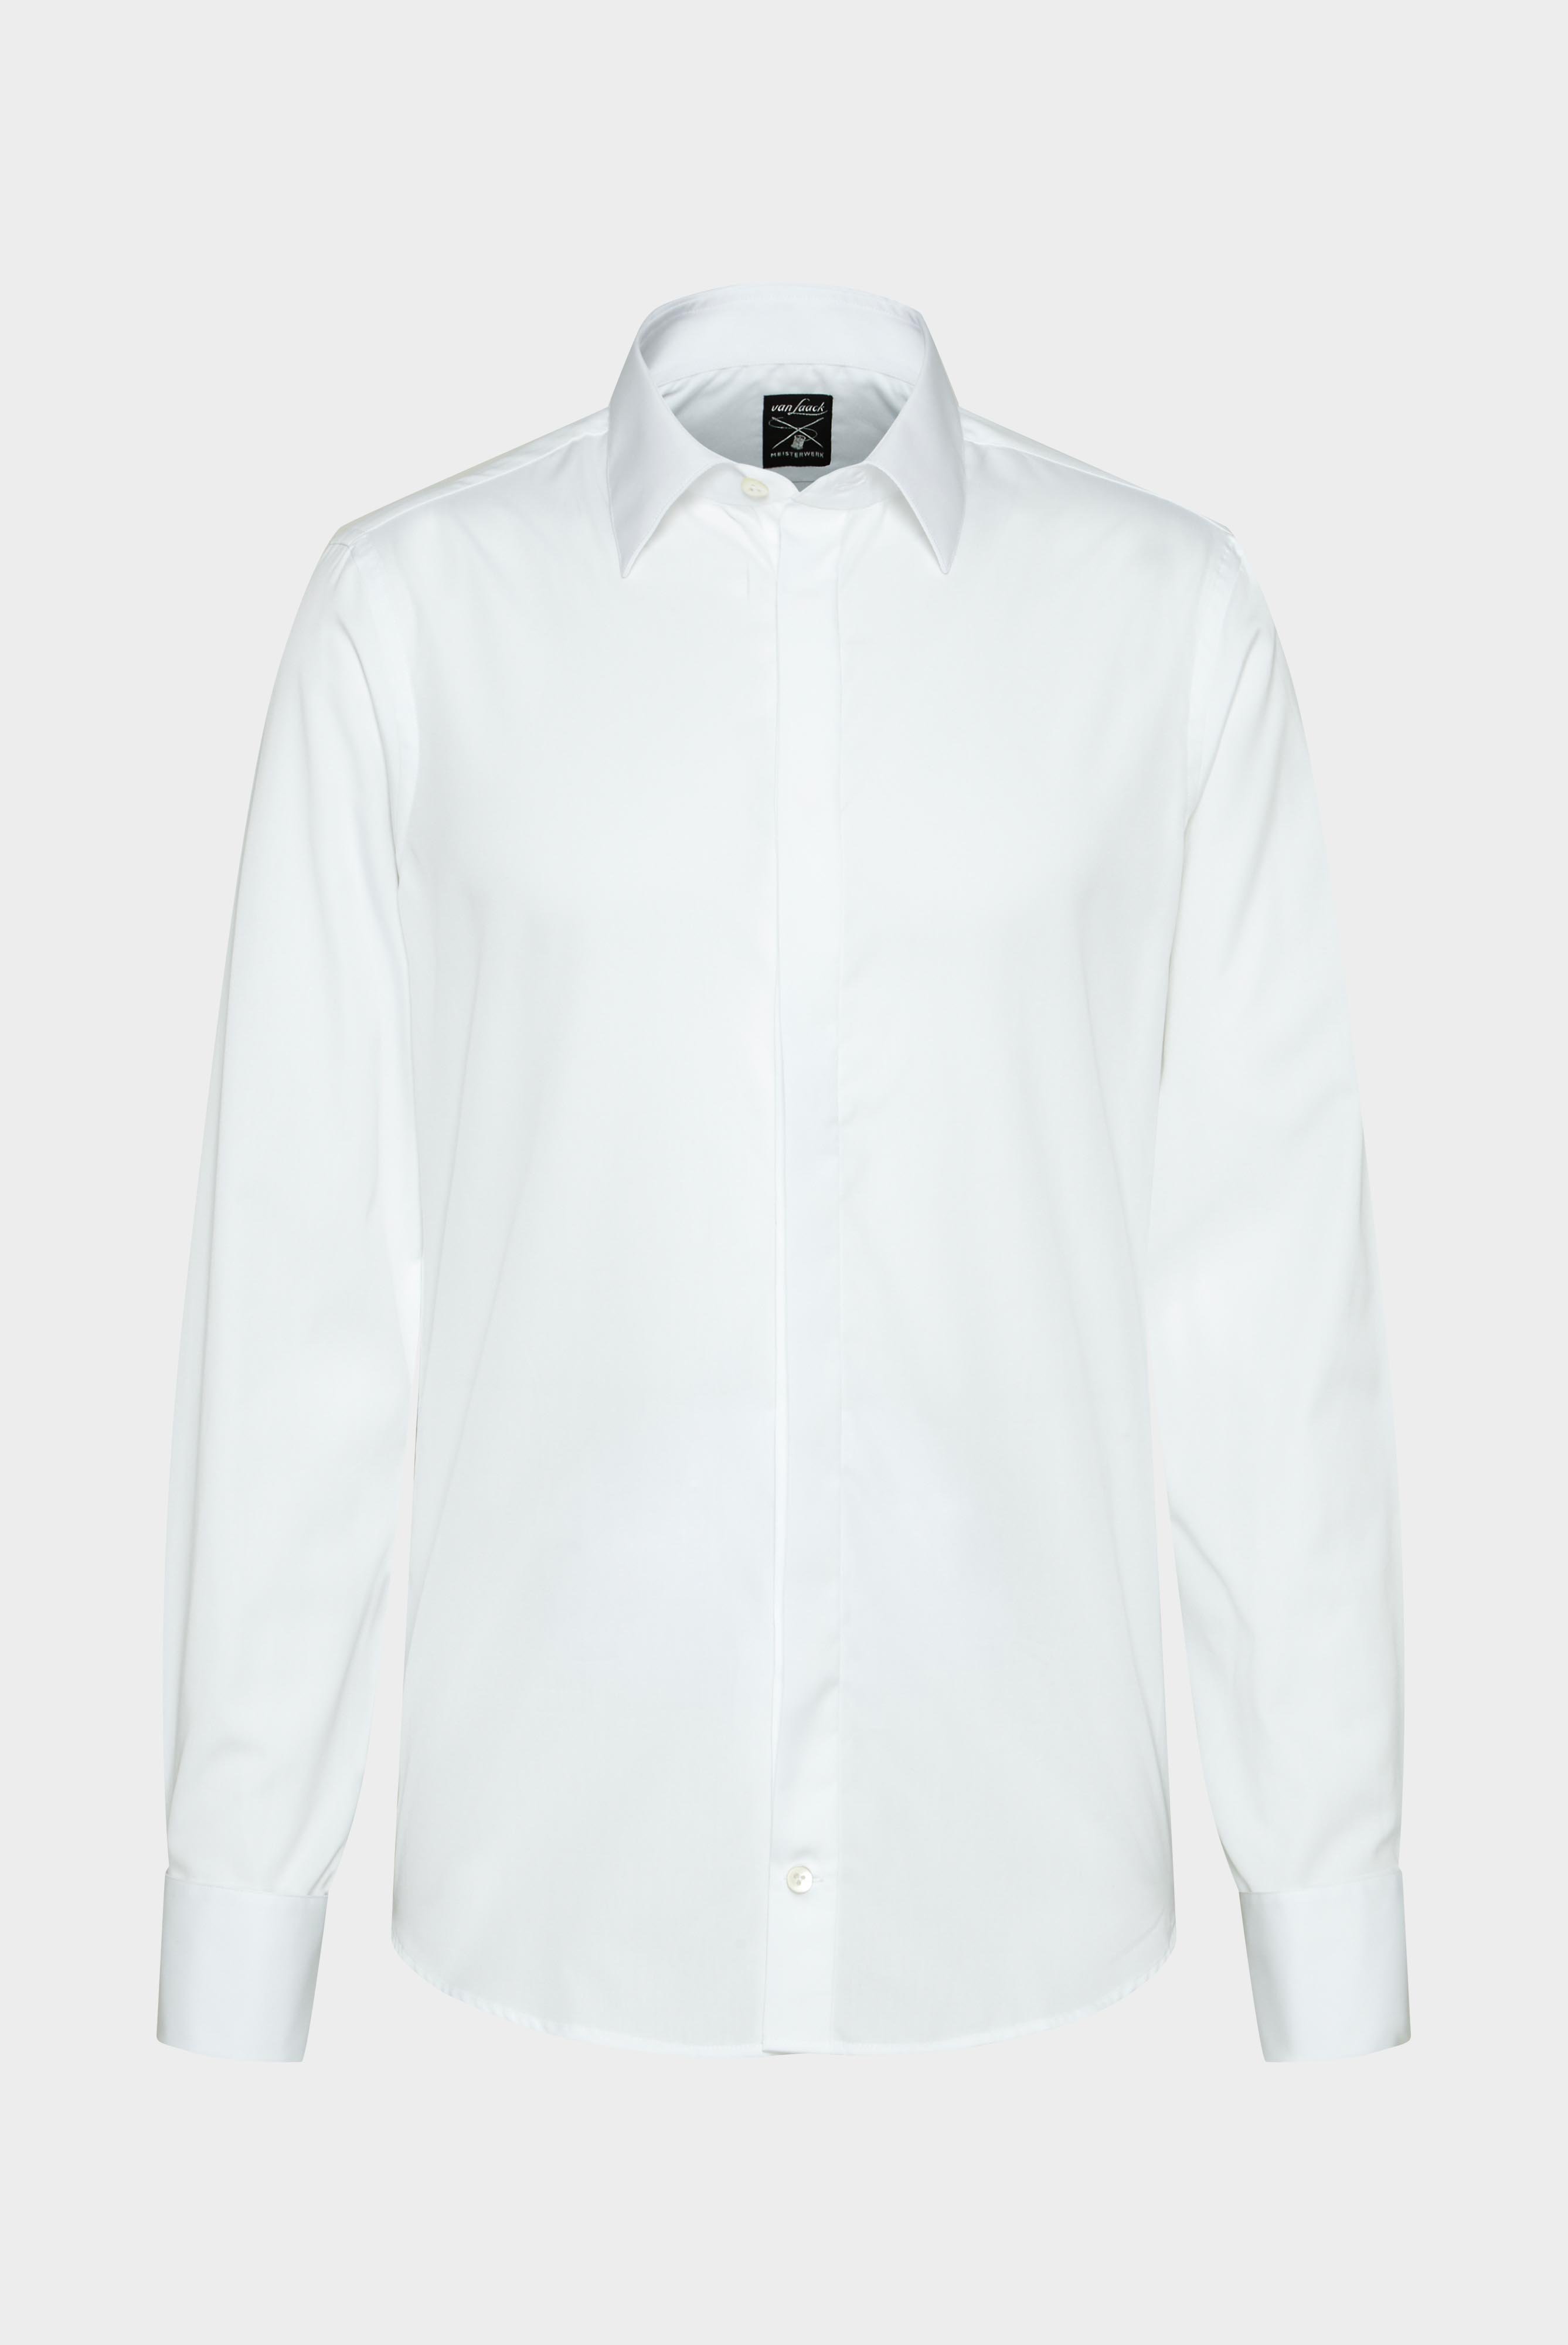 Festliche Hemden+Smokinghemd Slim Fit+20.2063.NV.130648.000.37